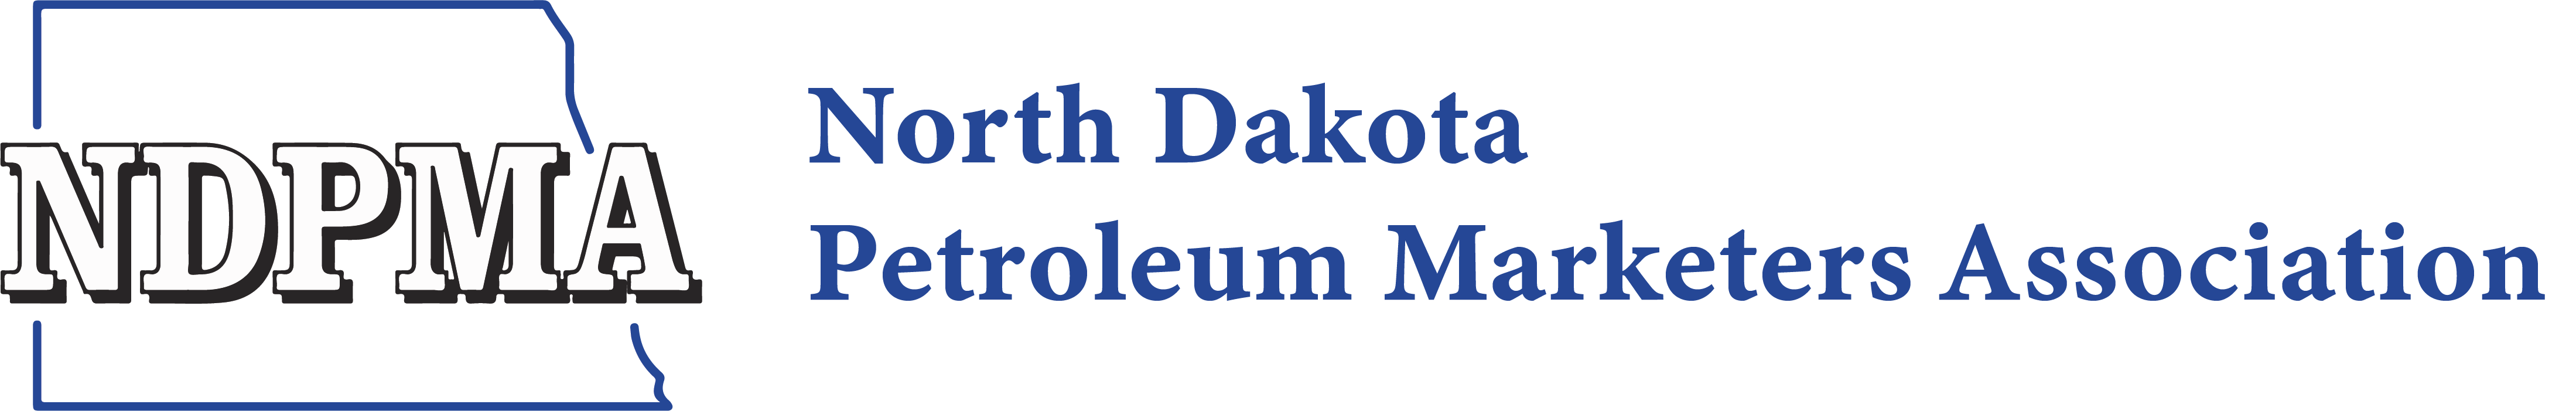 North Dakota Petroleum Marketers Association